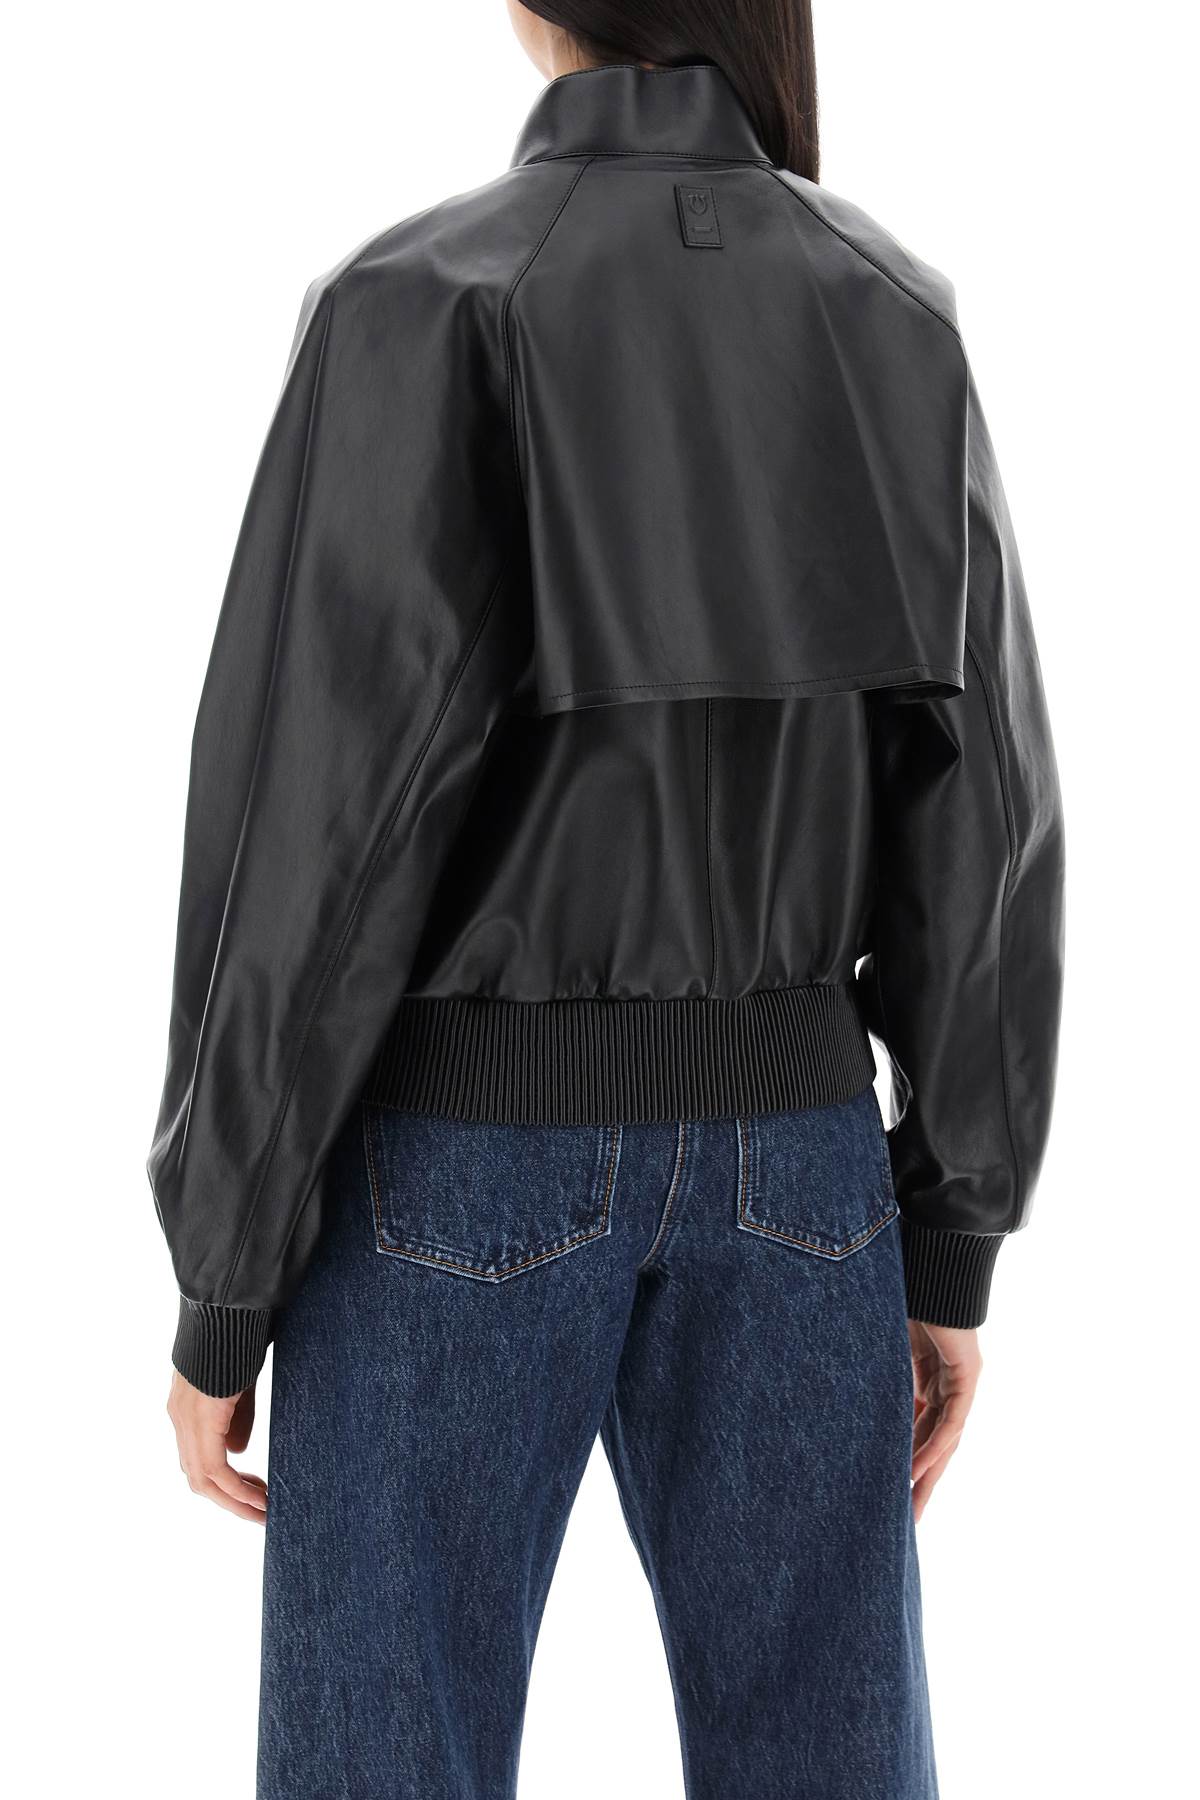 FERRAGAMO Luxurious Leather Jacket for Fashion-Forward Women